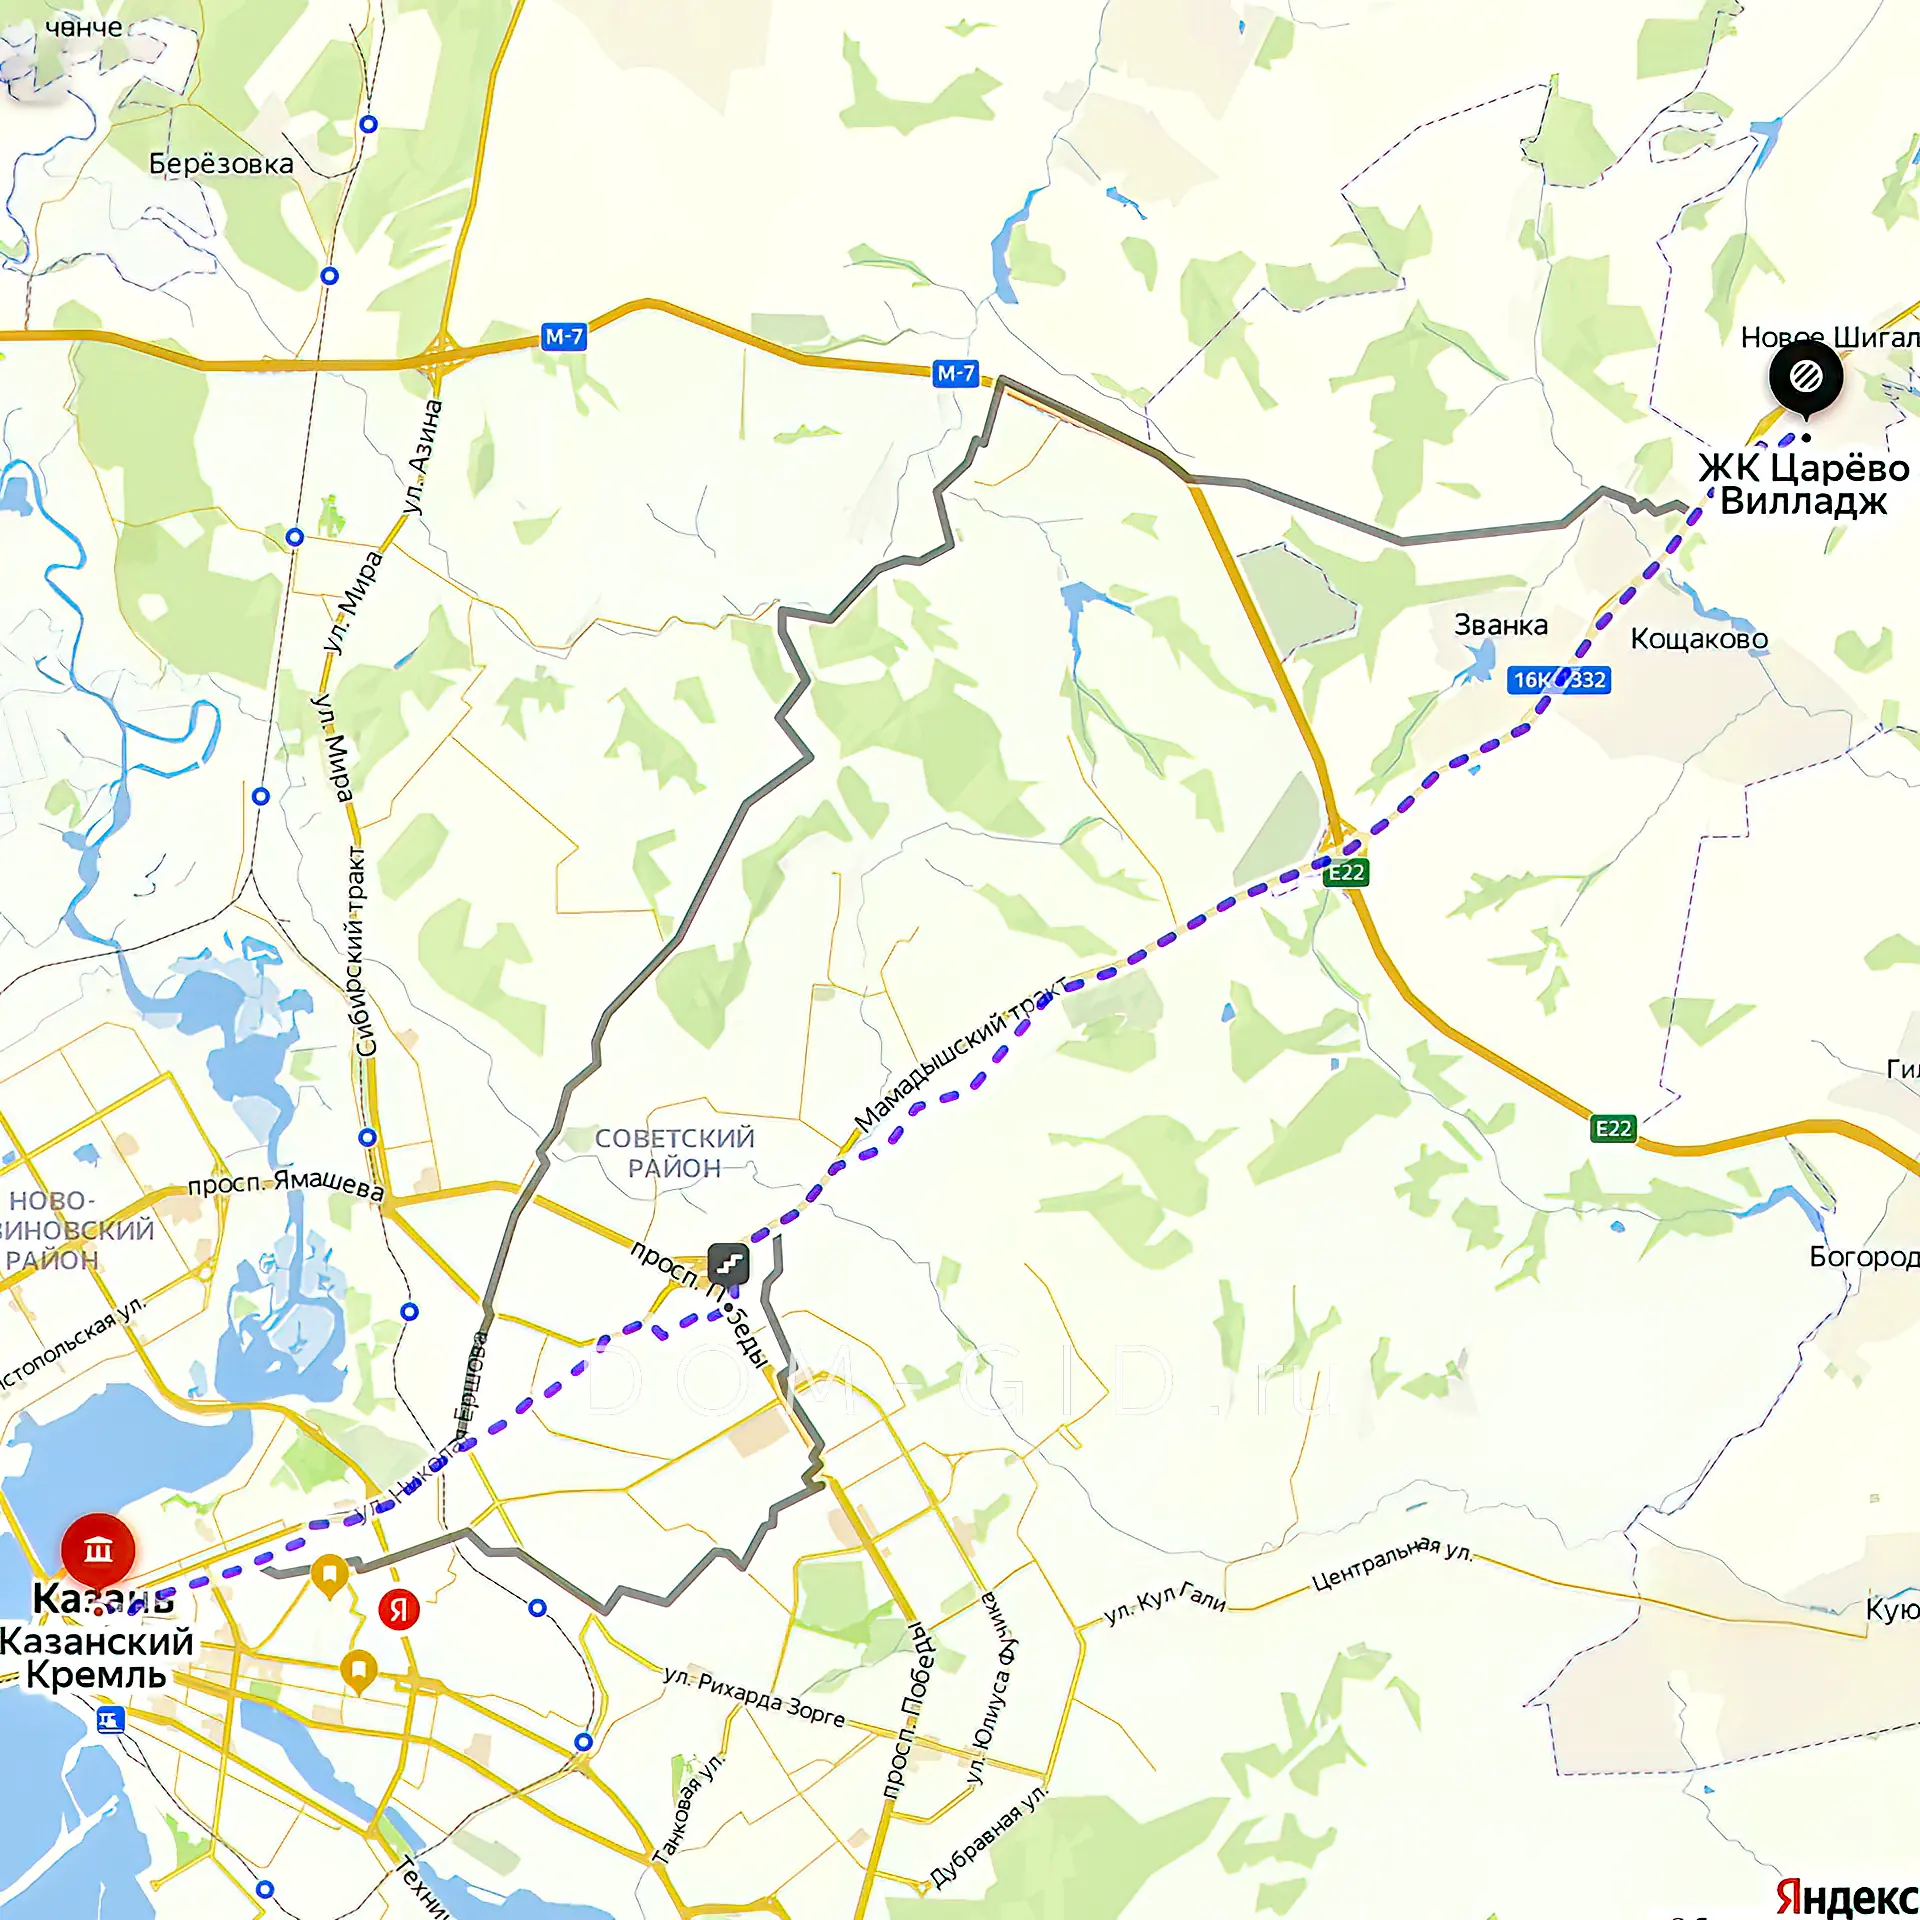 Расположение и маршрут на карте от ЖК Царево Village до центра города